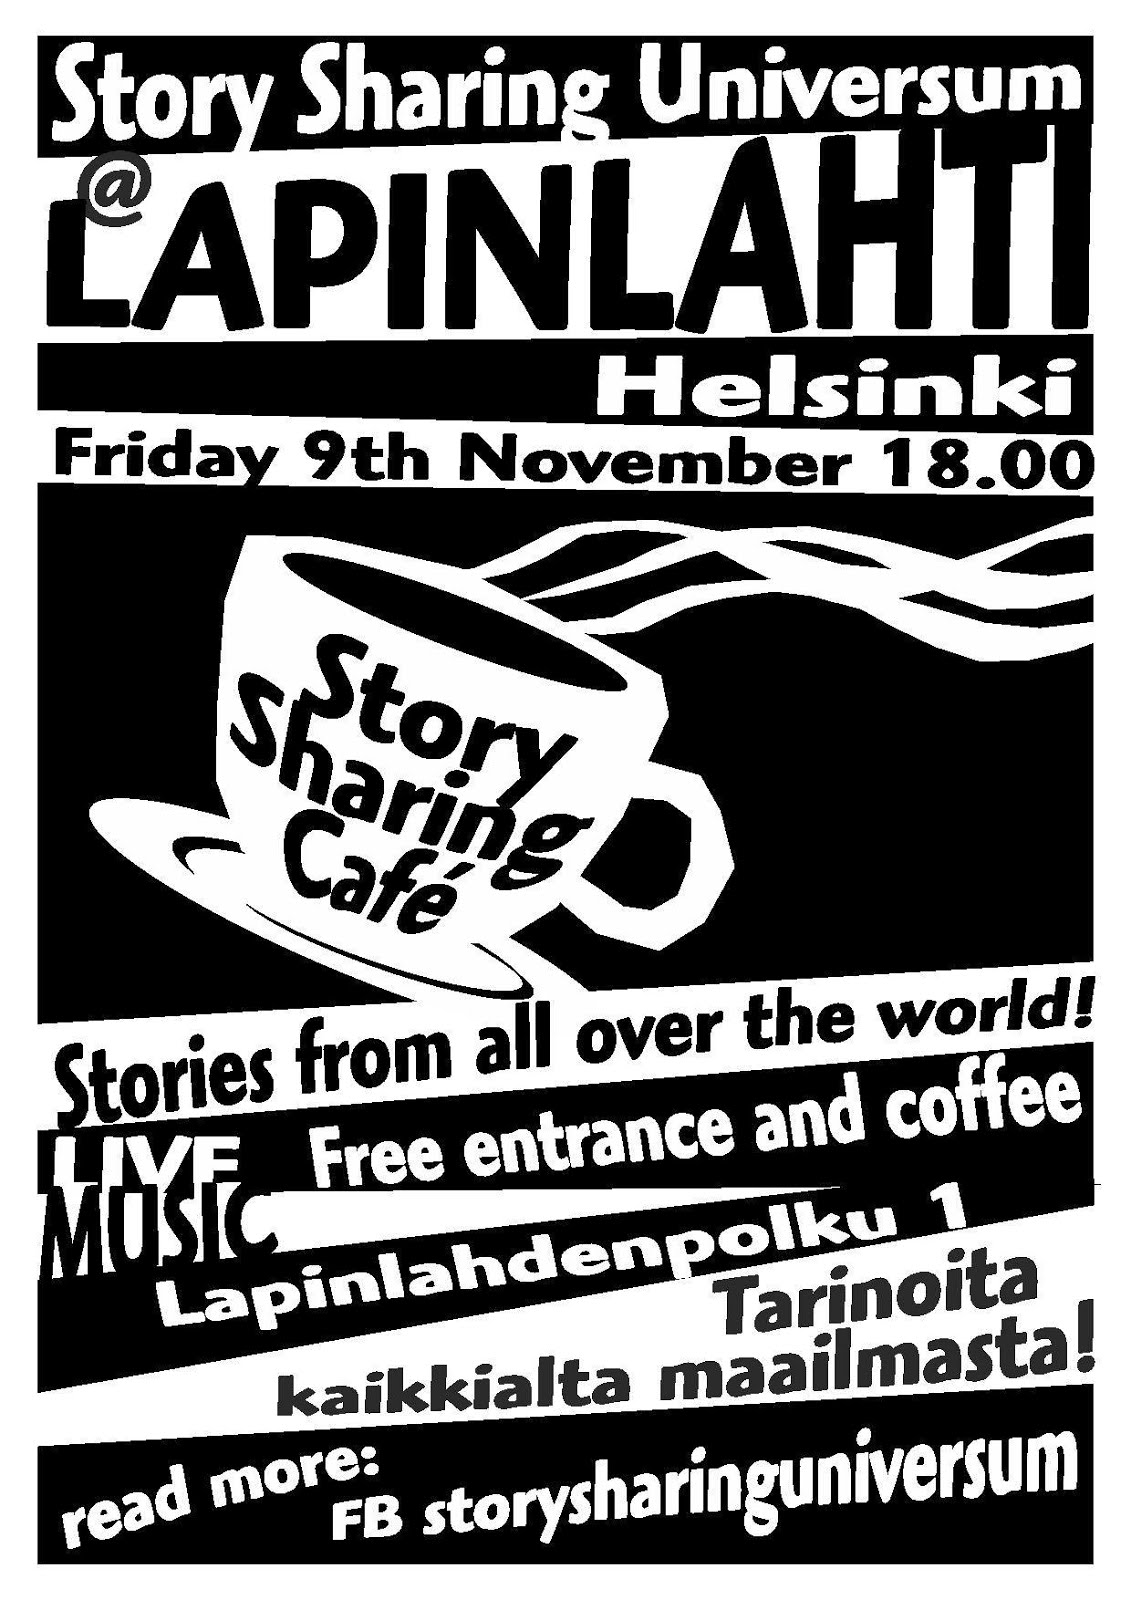 Story Sharing Café at Lapinlahti